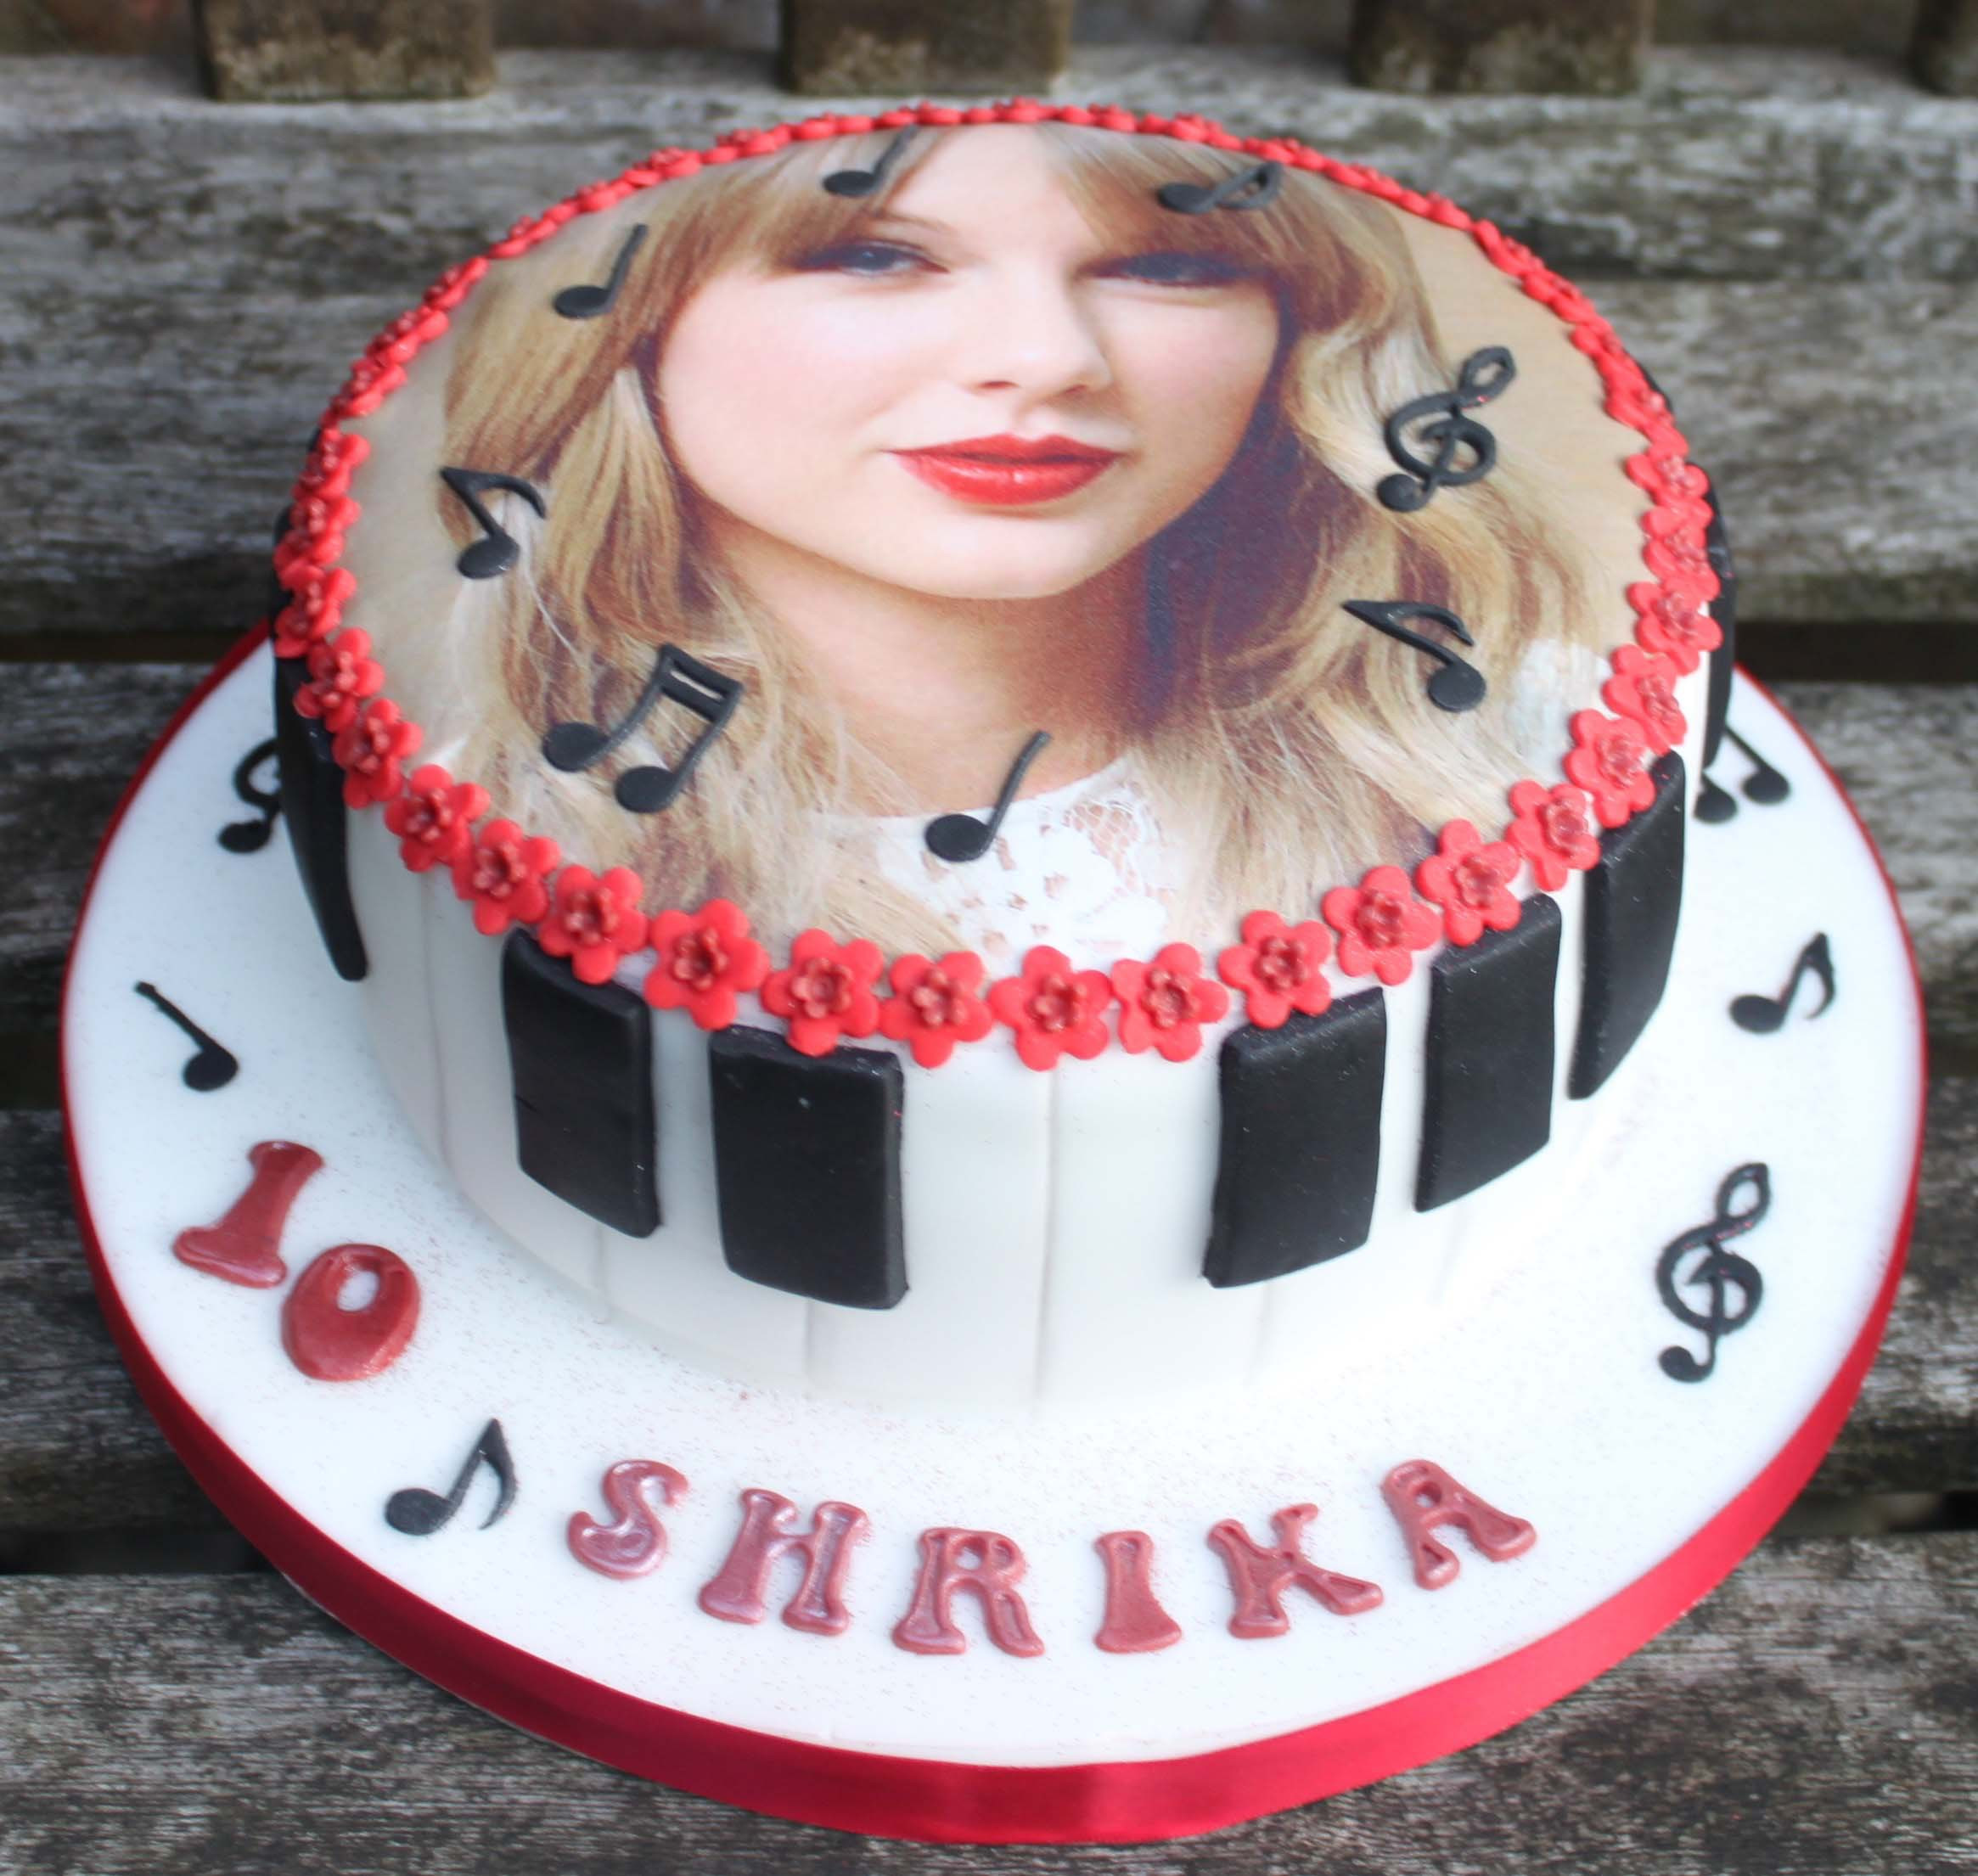 Taylor Swift Birthday Cake
 Cakes for Children